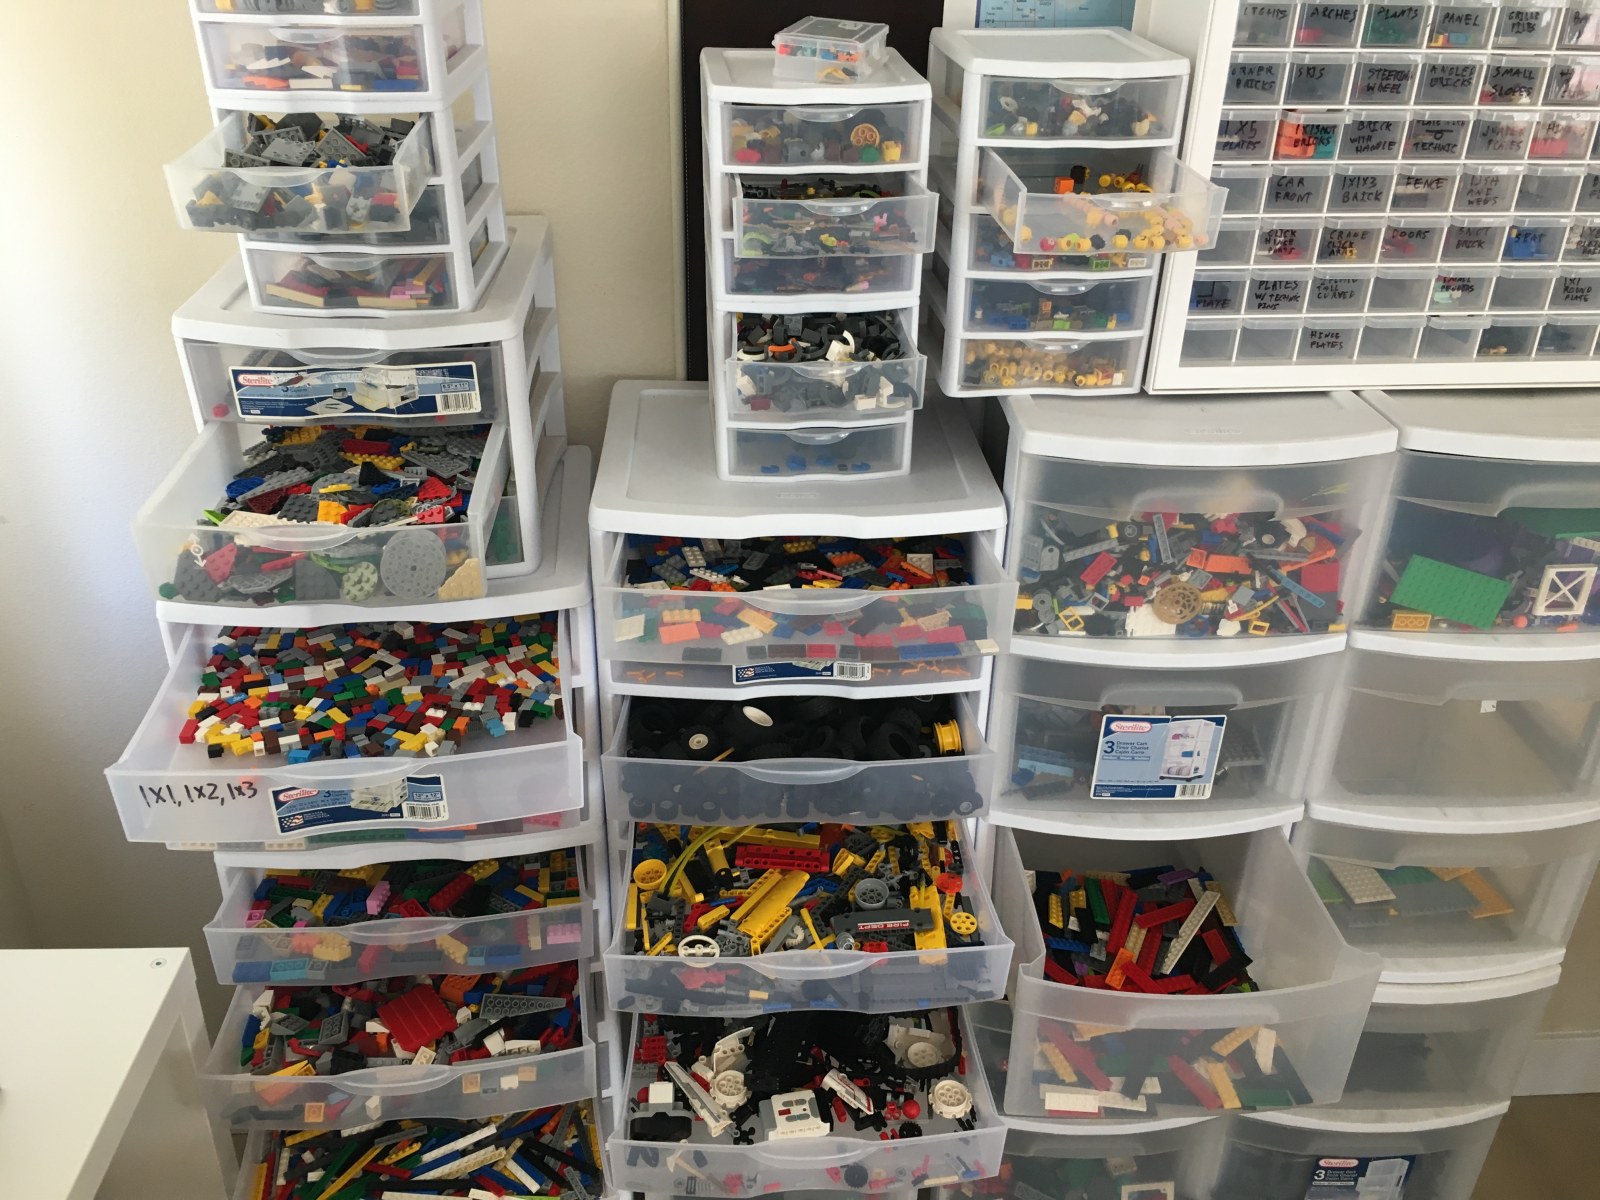 storage ideas for lego sets